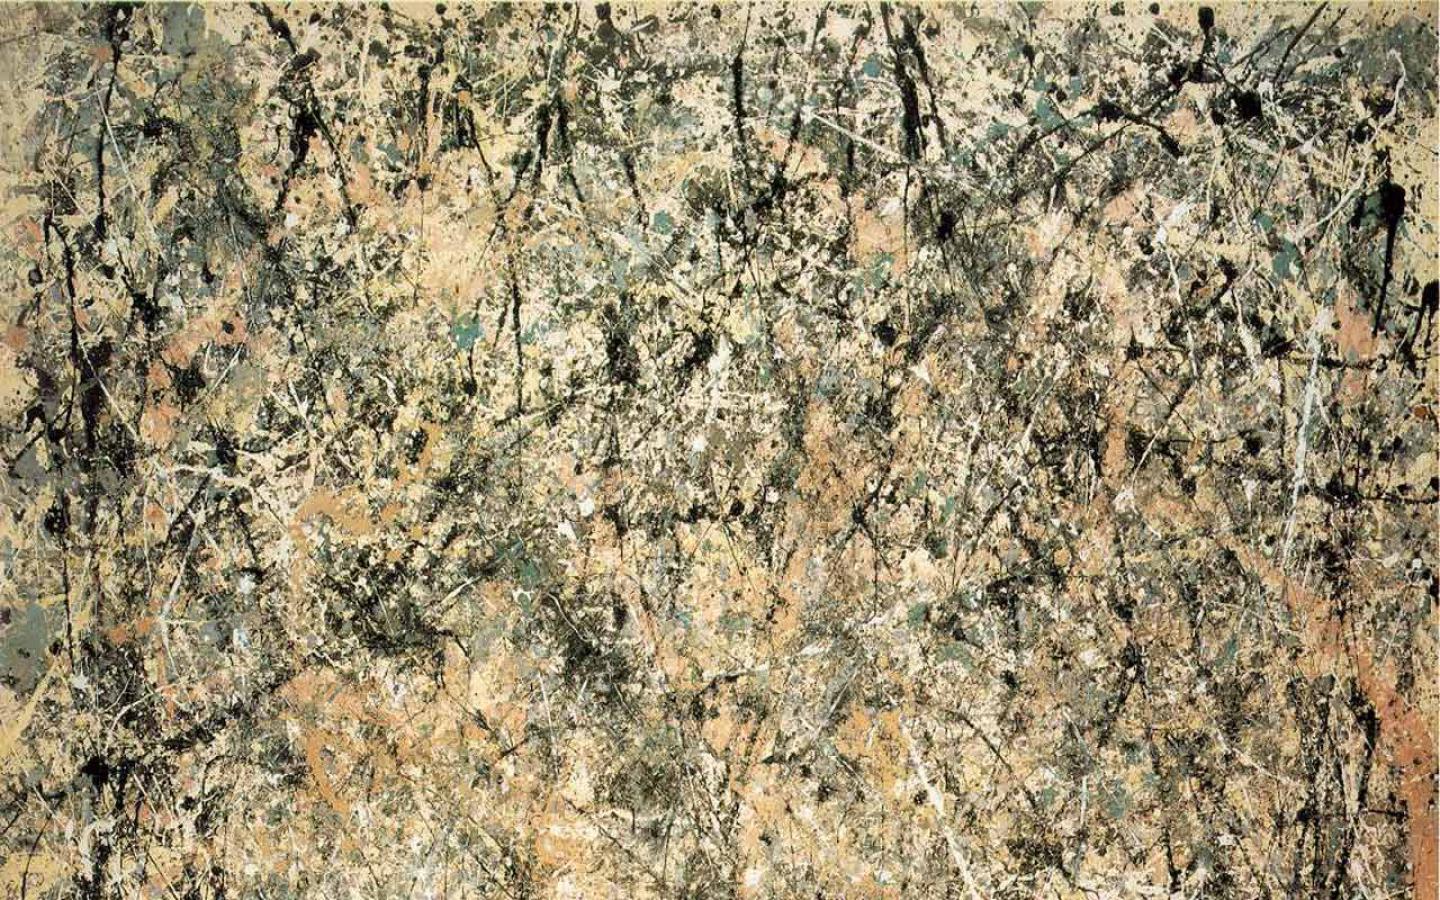  Pollock   Number 1   Lavender Mist 1950 Wallpaper 4 1440 x 900